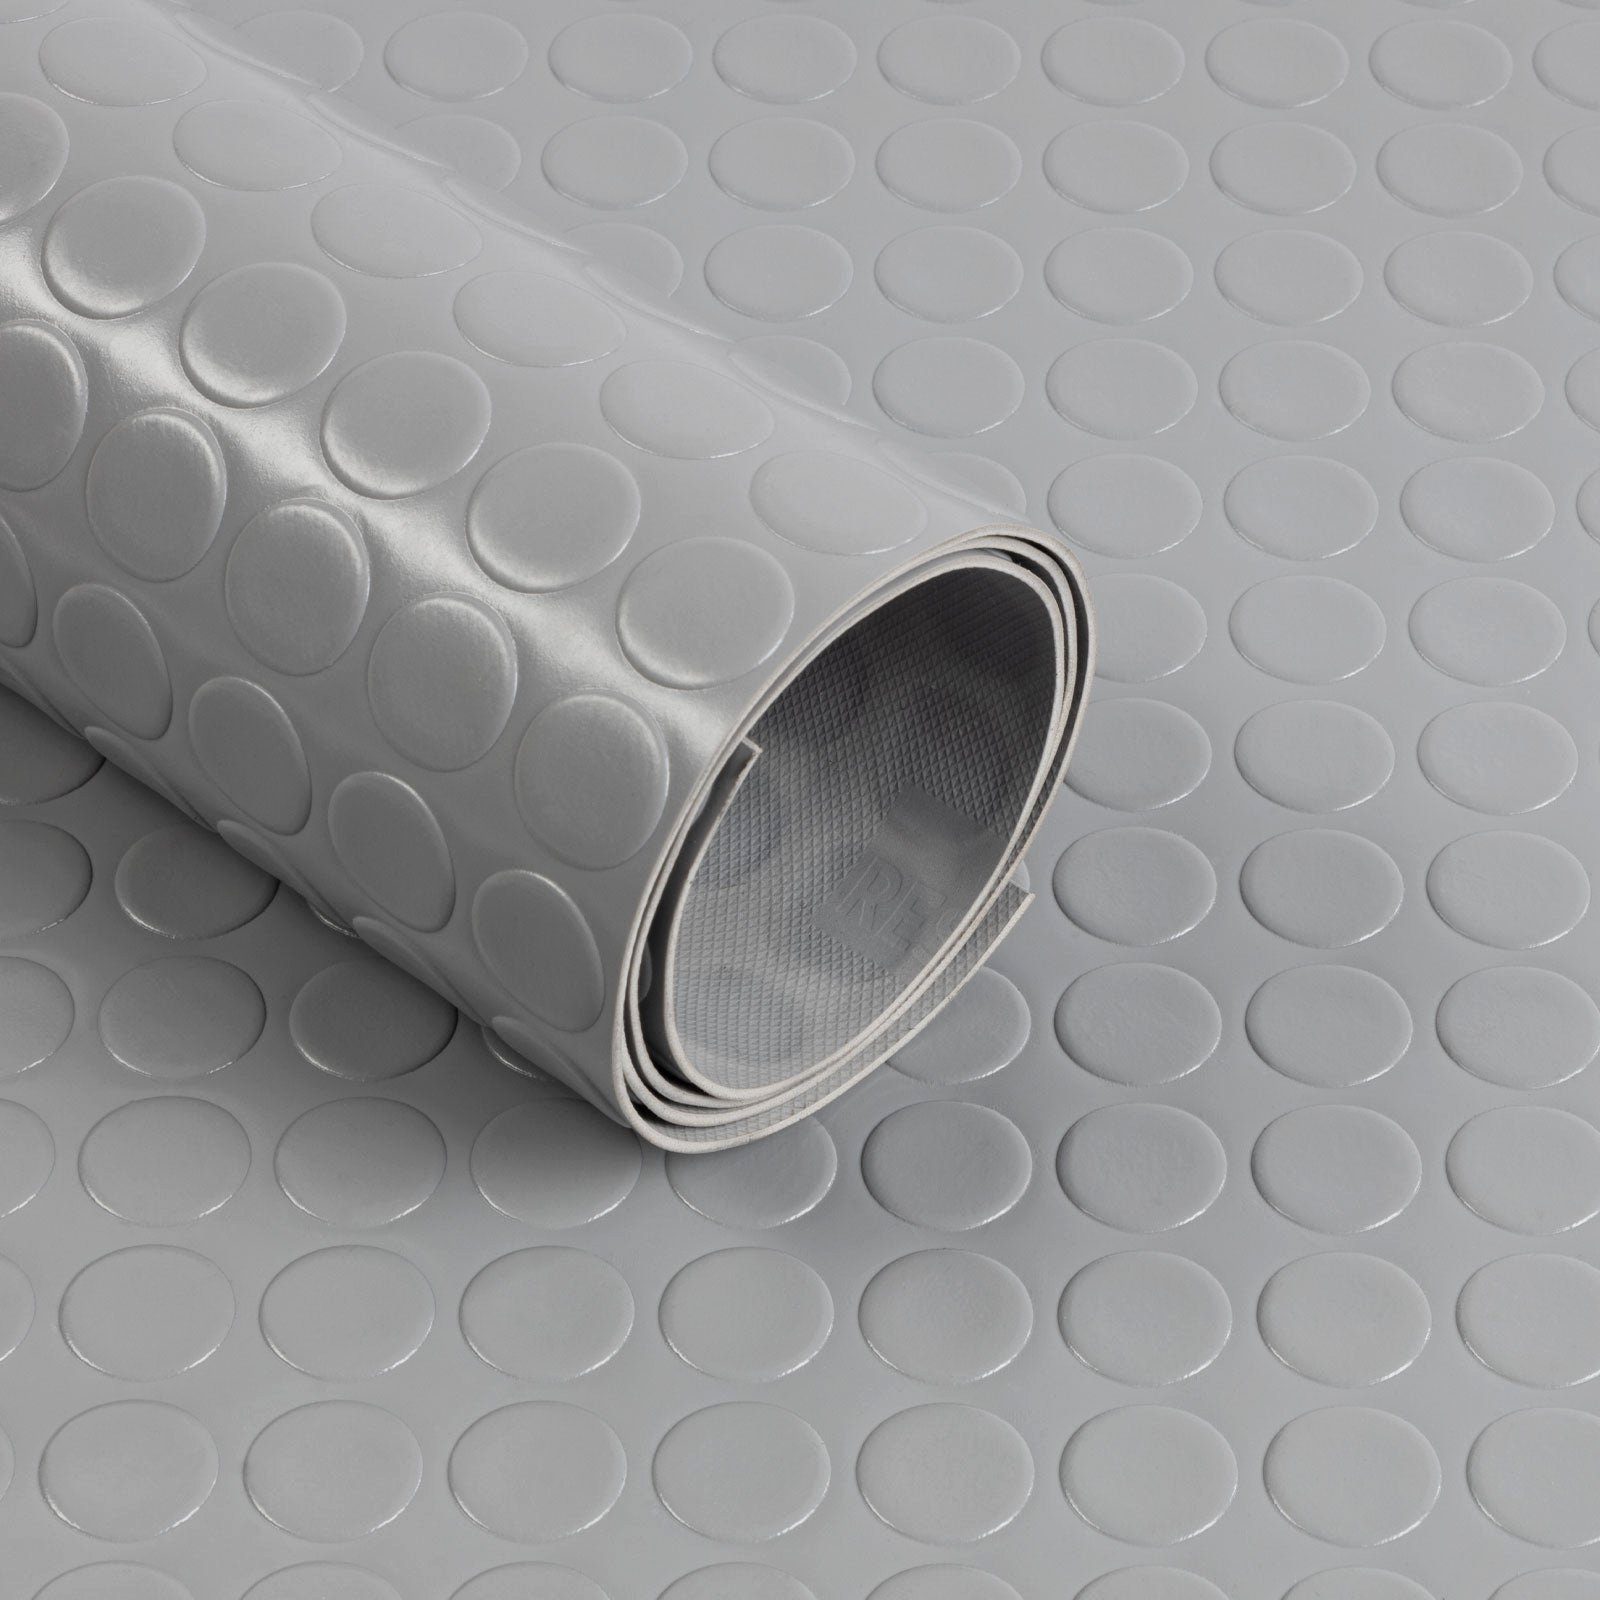 Grau Farben Bodenschutzmatte PVC-Bodenbelag, Noppen, 2mm, Kubus Große Stärke viele